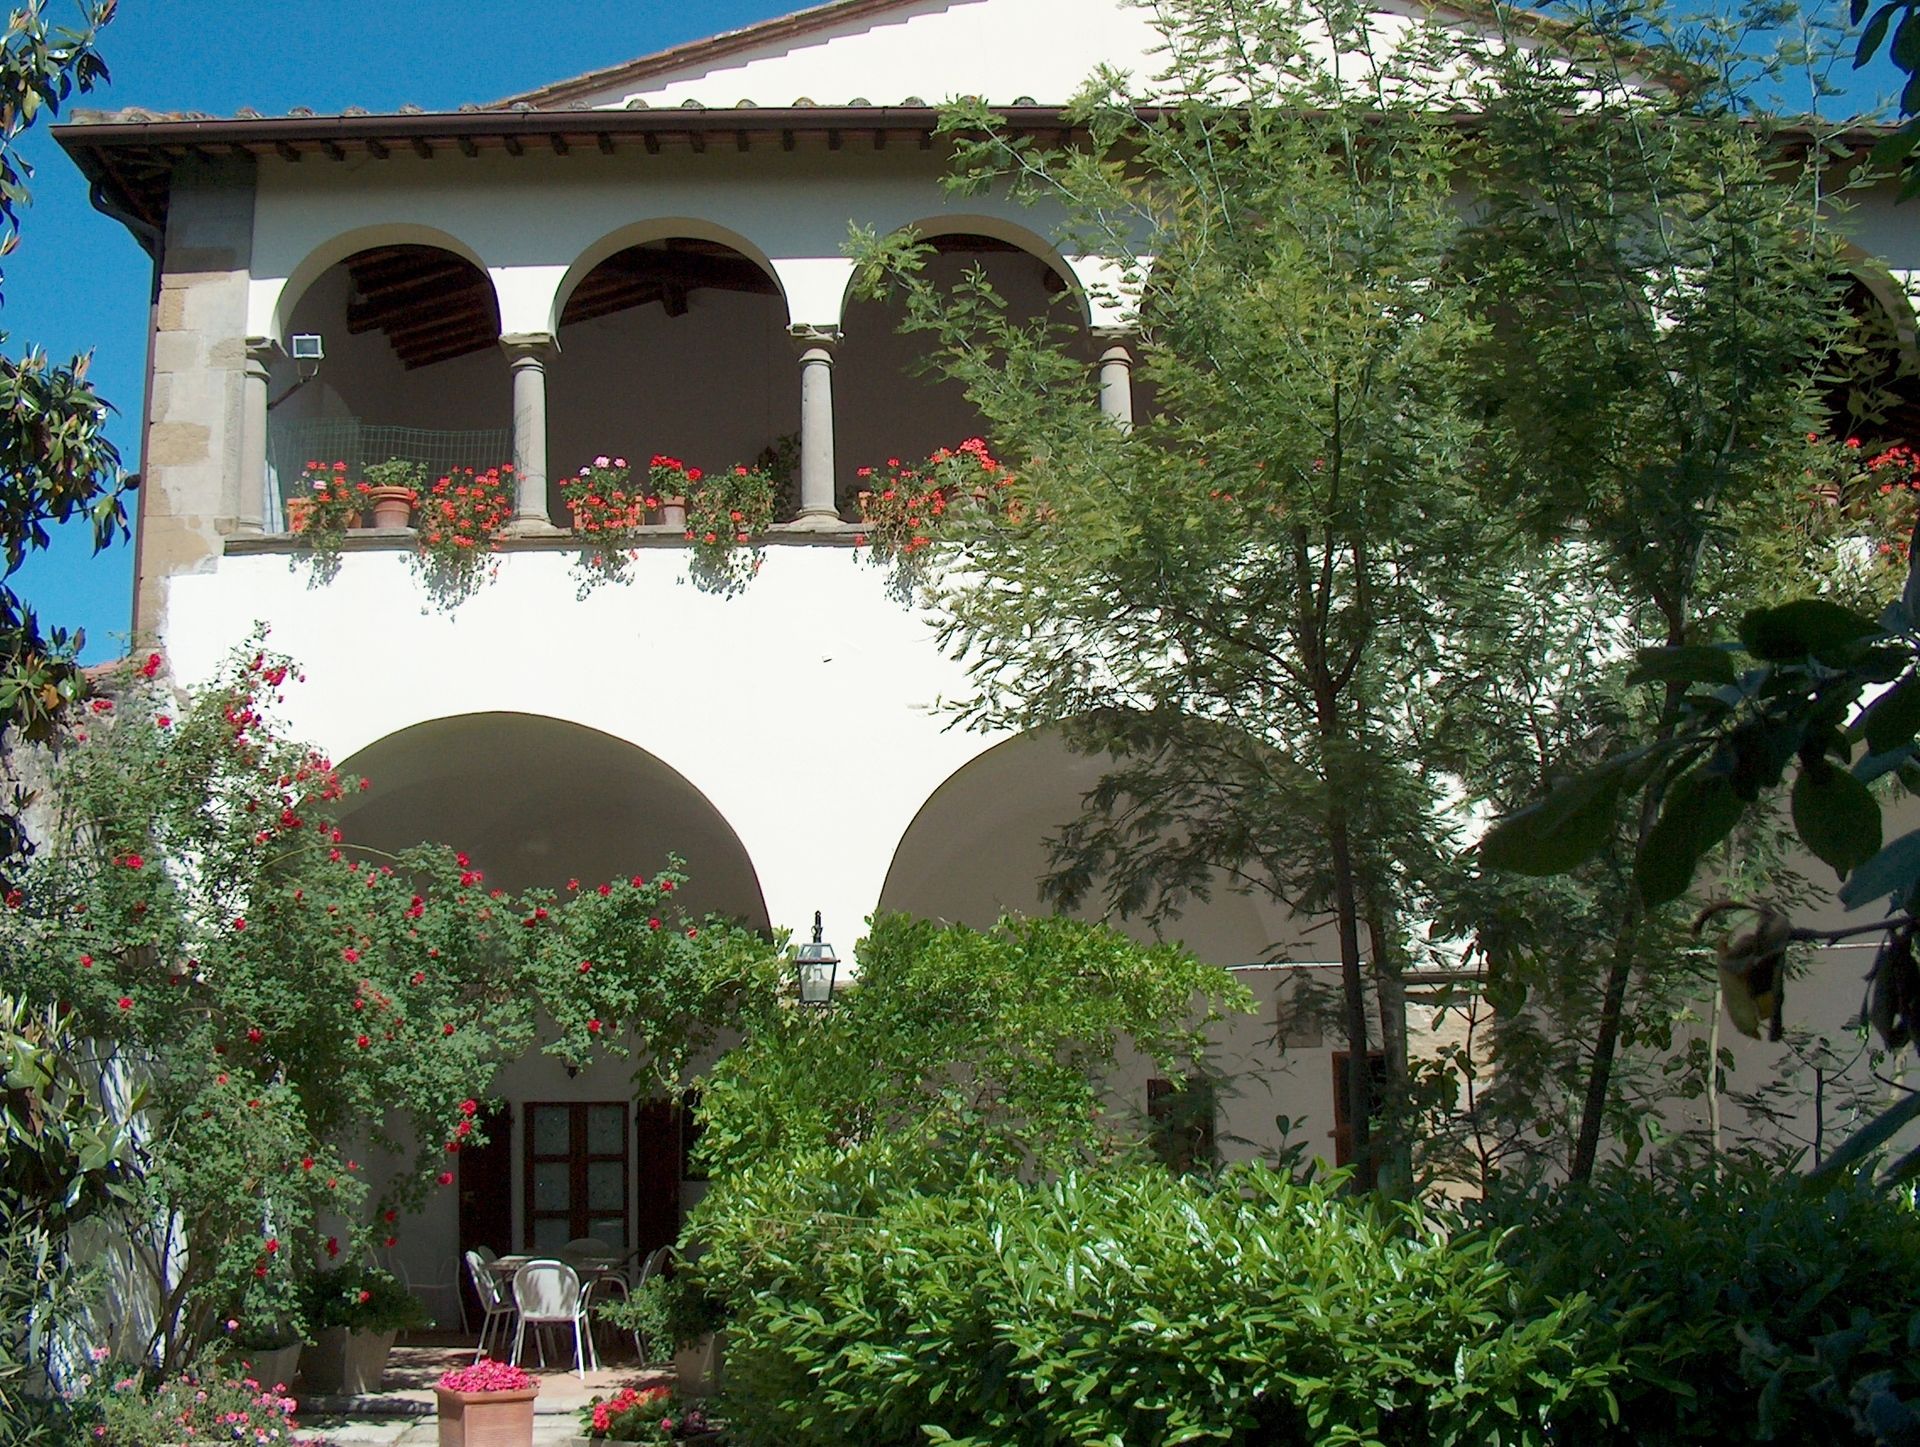 Villa Sant'Agnese, facade of the Ex Convent